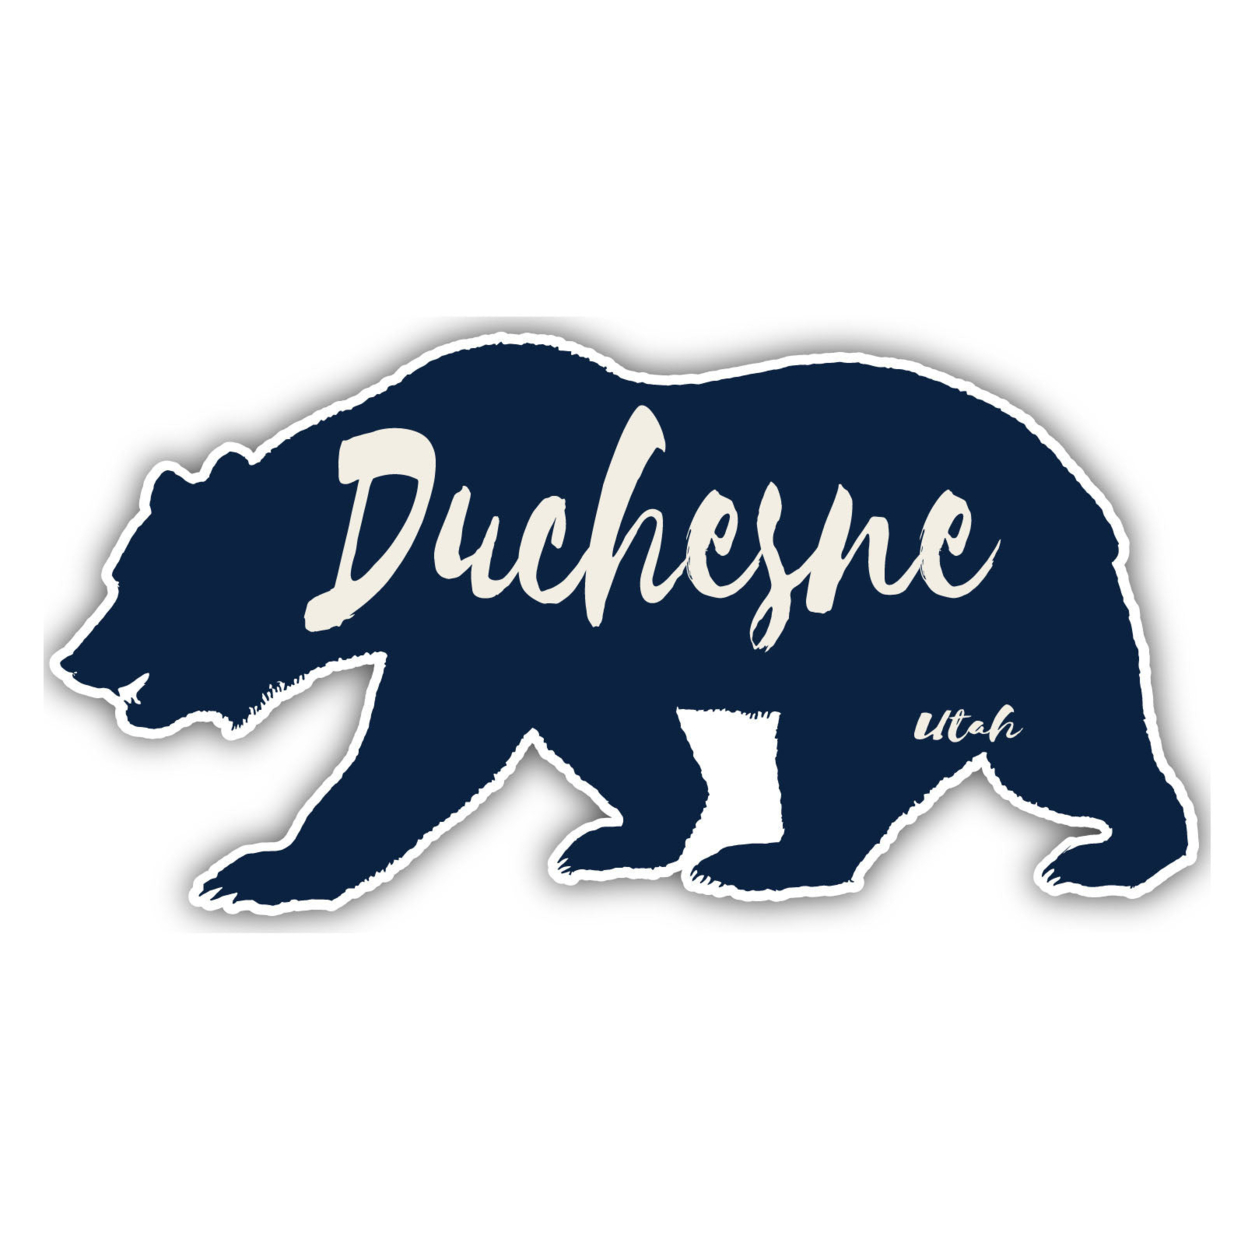 Duchesne Utah Souvenir Decorative Stickers (Choose Theme And Size) - 4-Pack, 4-Inch, Bear